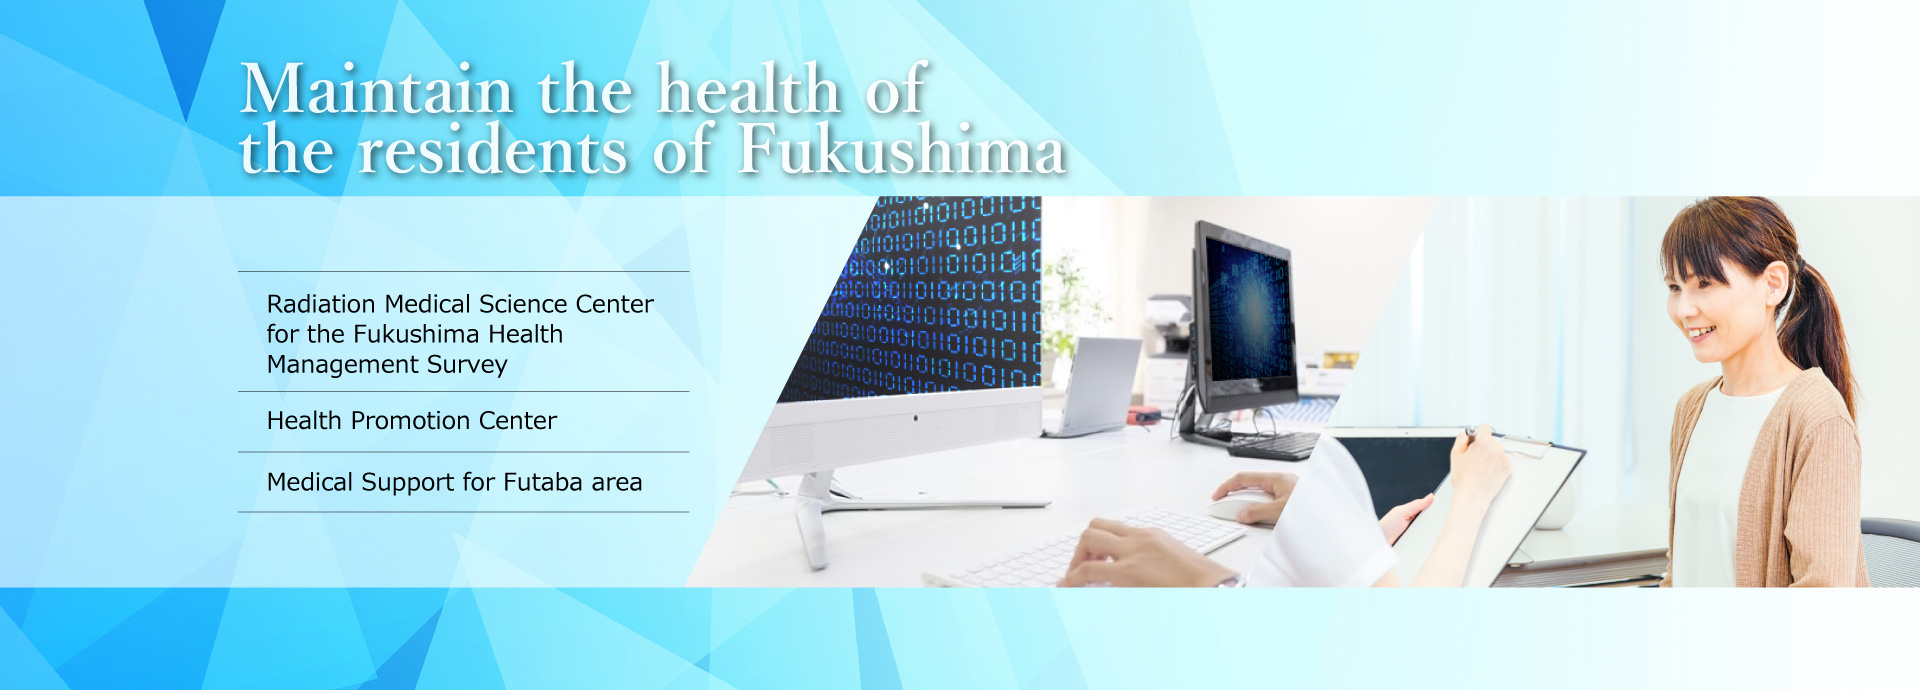 Maintain the health of the residents of Fukushima